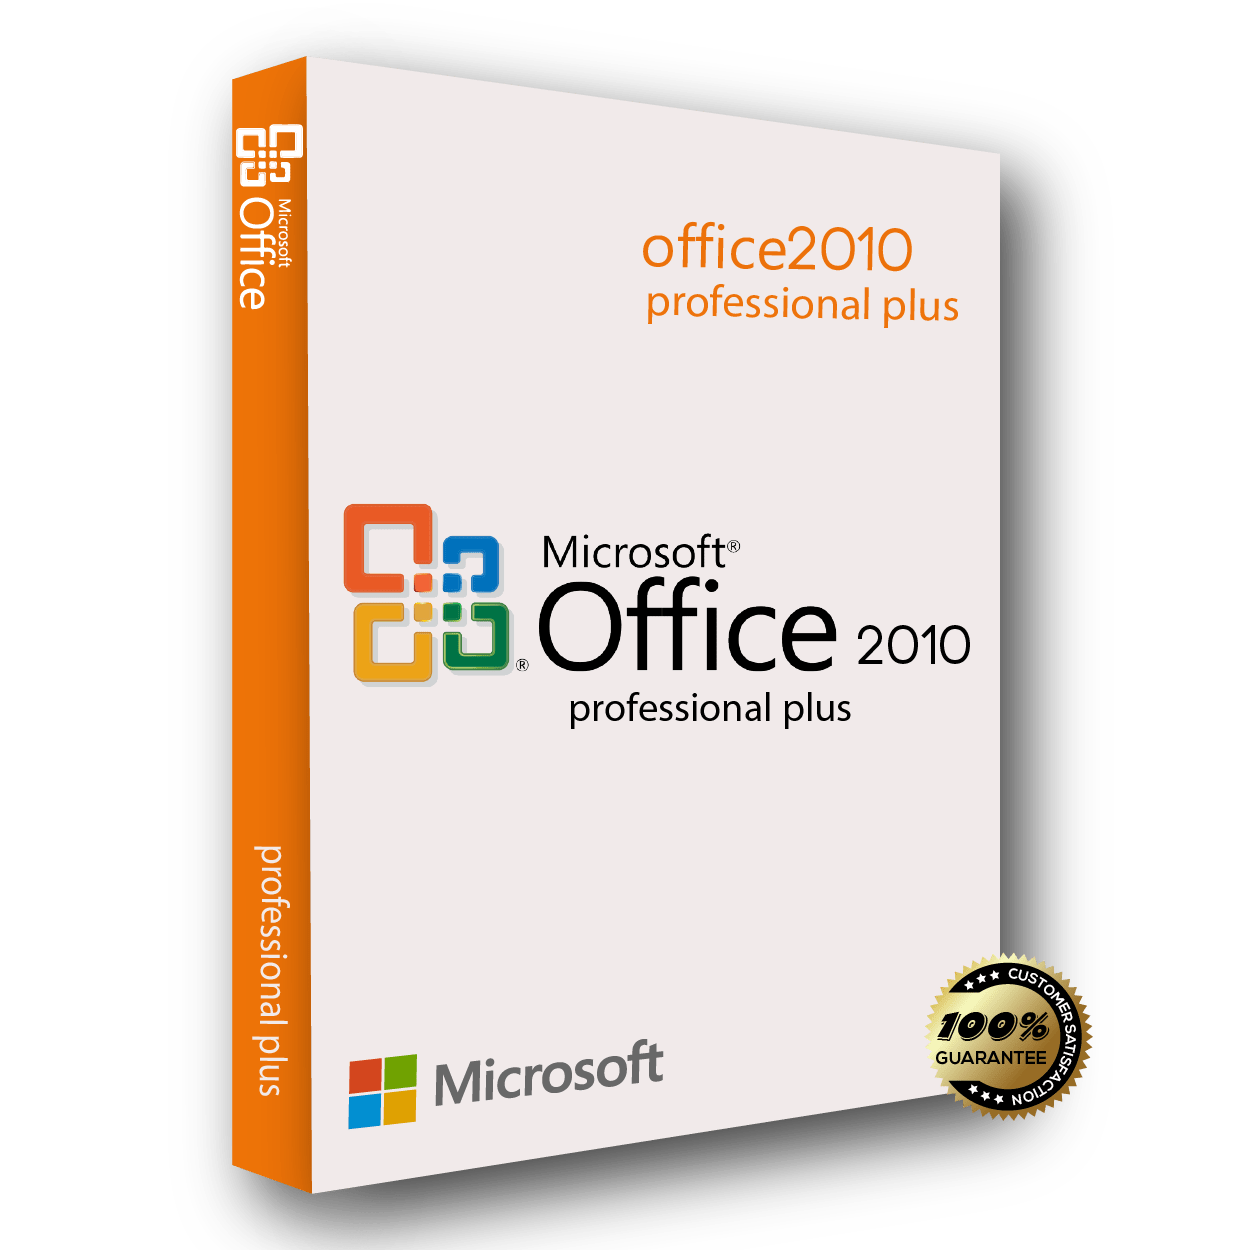 microsoft office 2010 pro plus free download full version